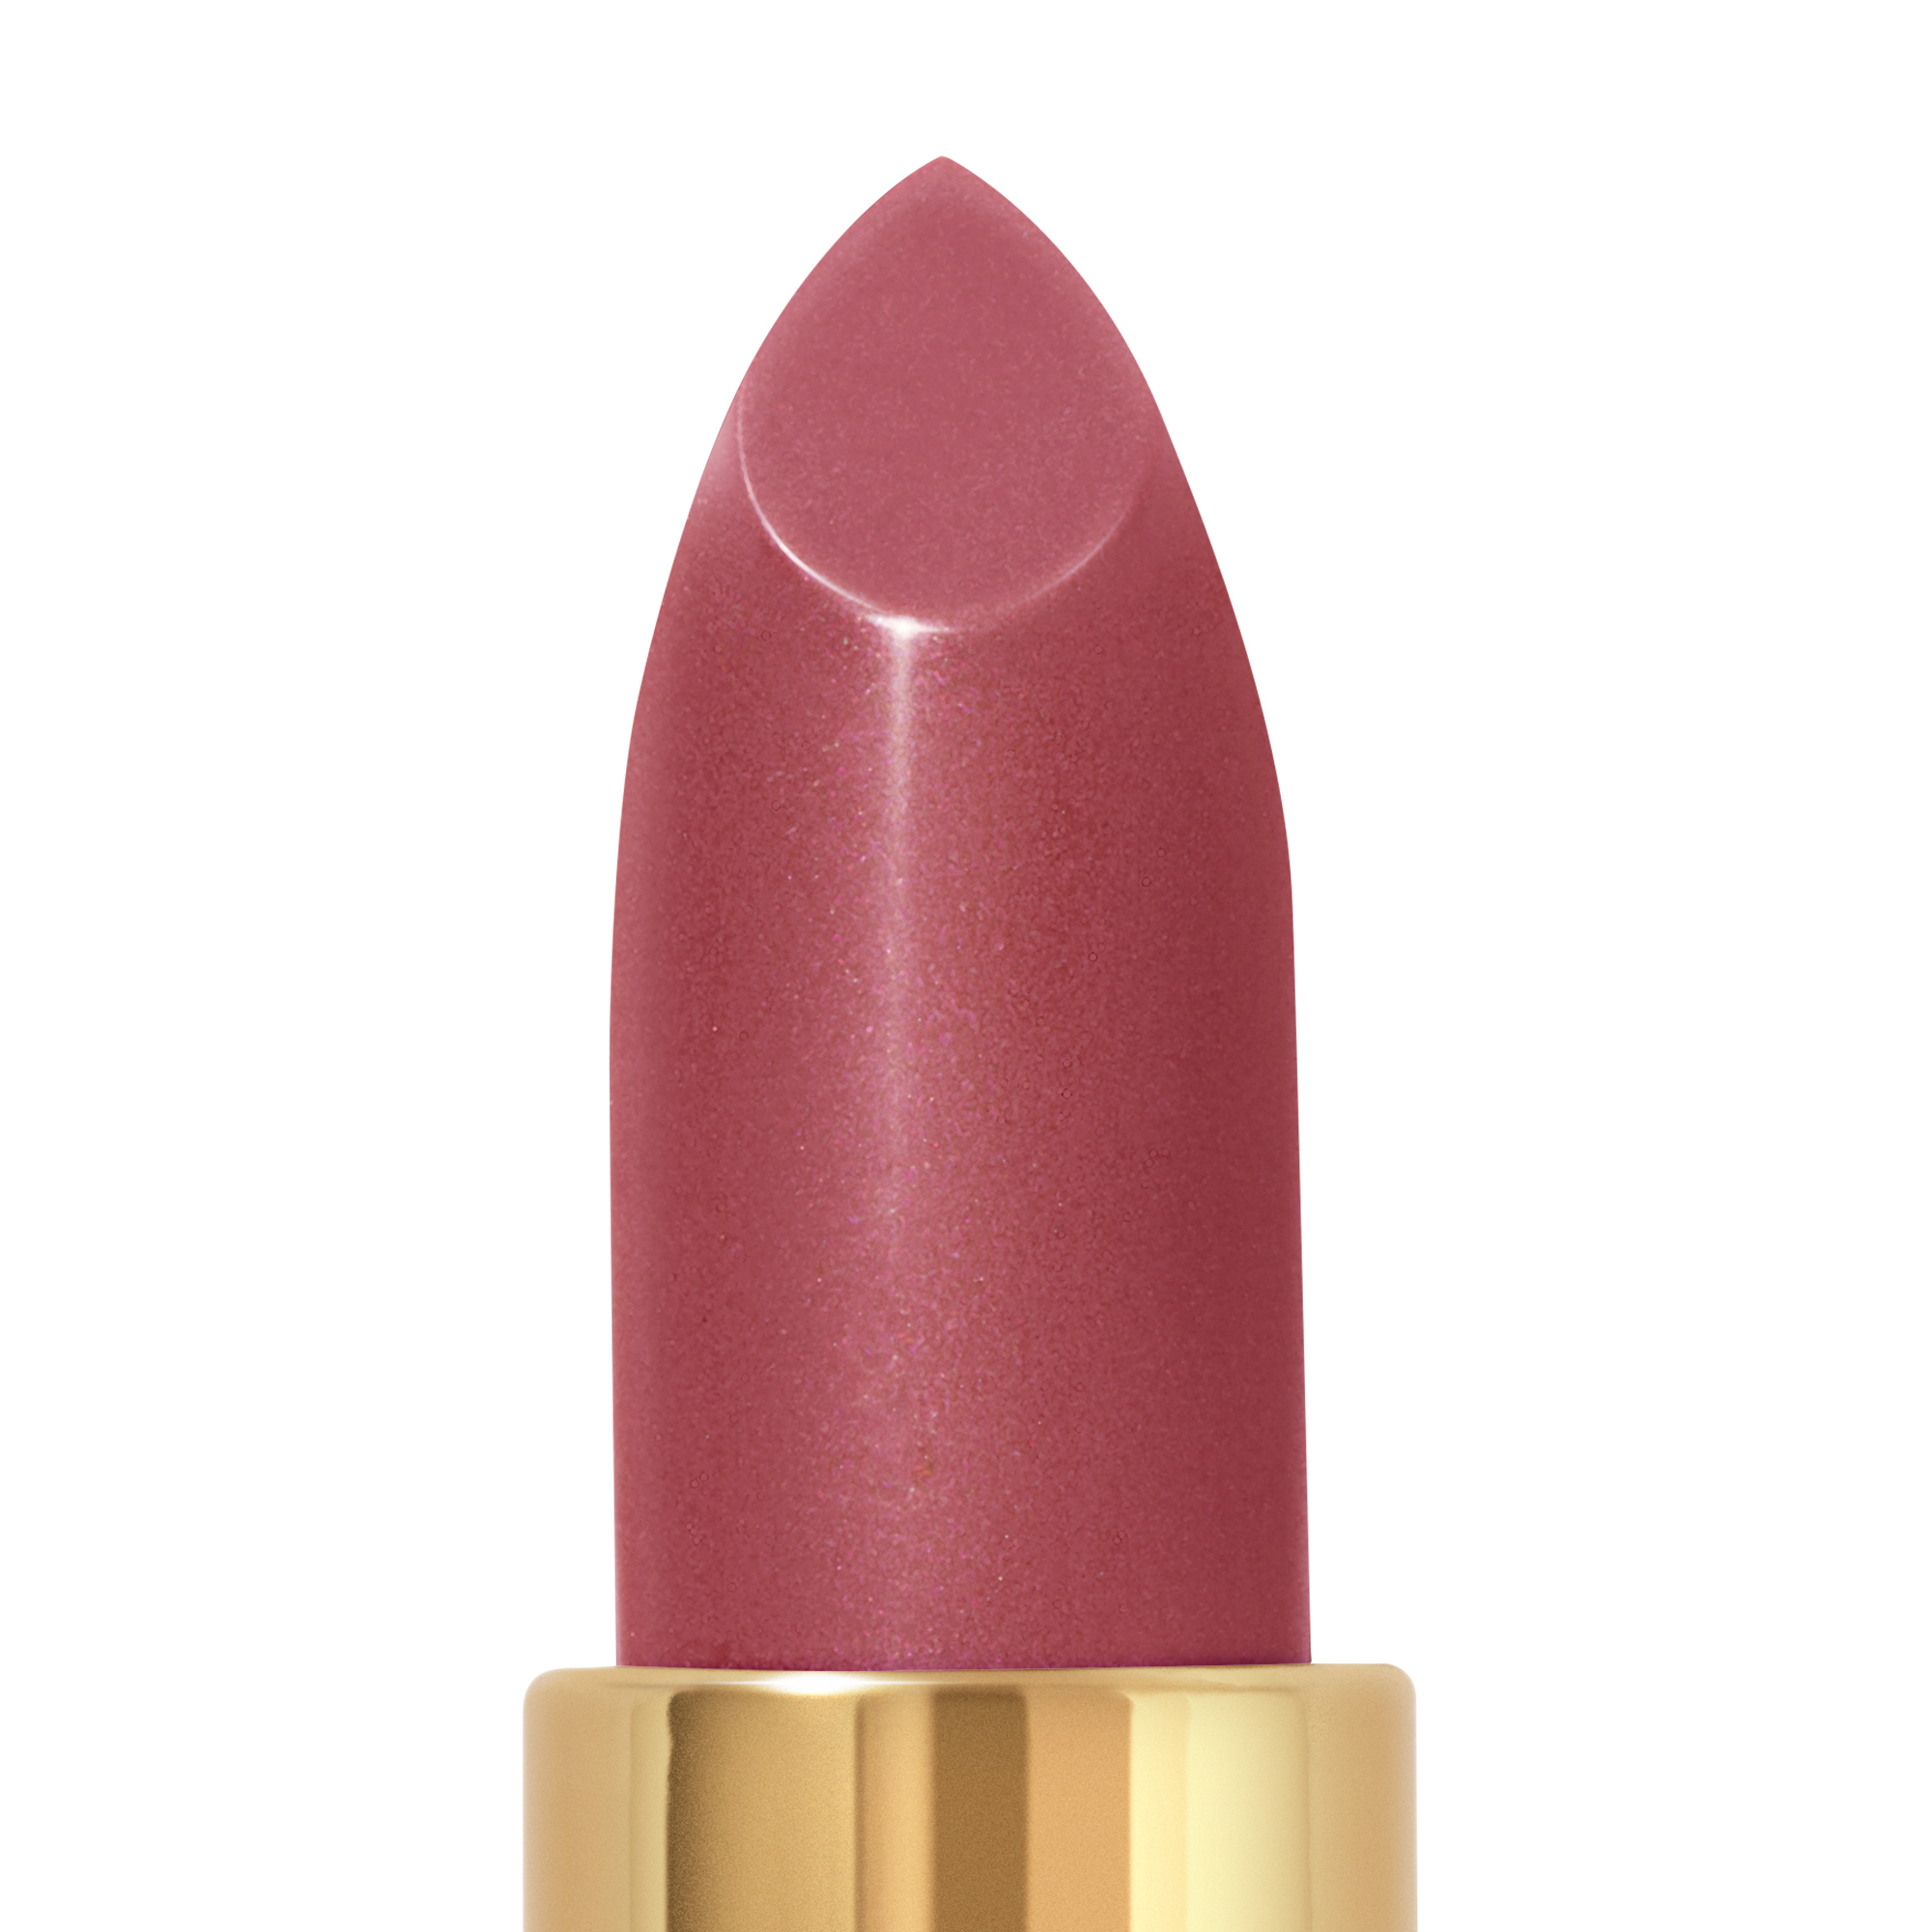 Revlon Super Lustrous Lipstick, Berry Smoothie - image 4 of 7